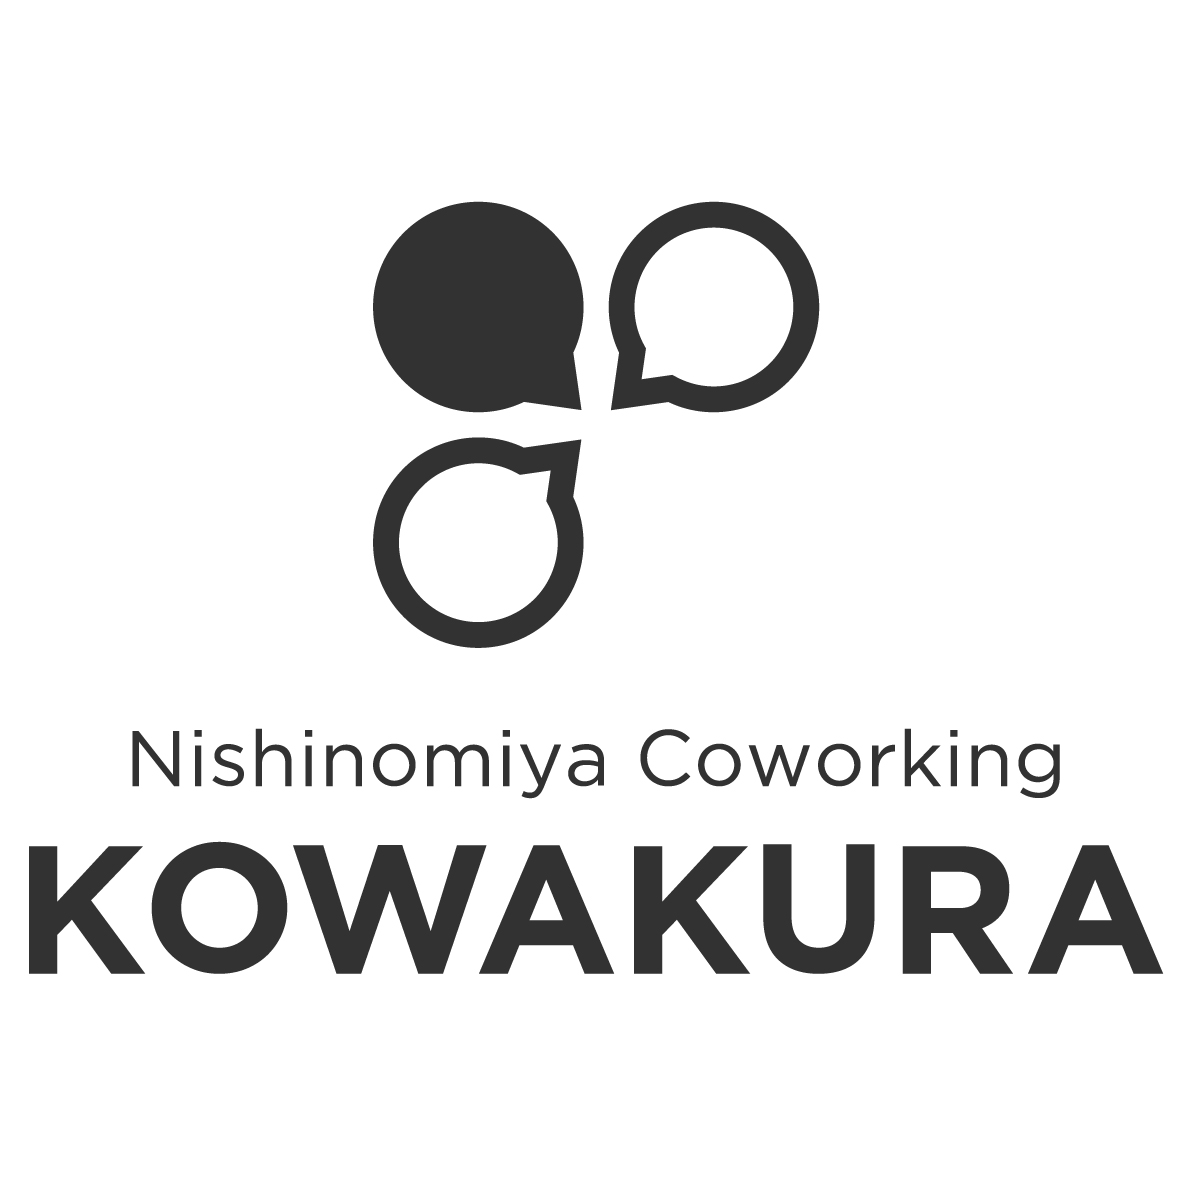 kowakura-logo